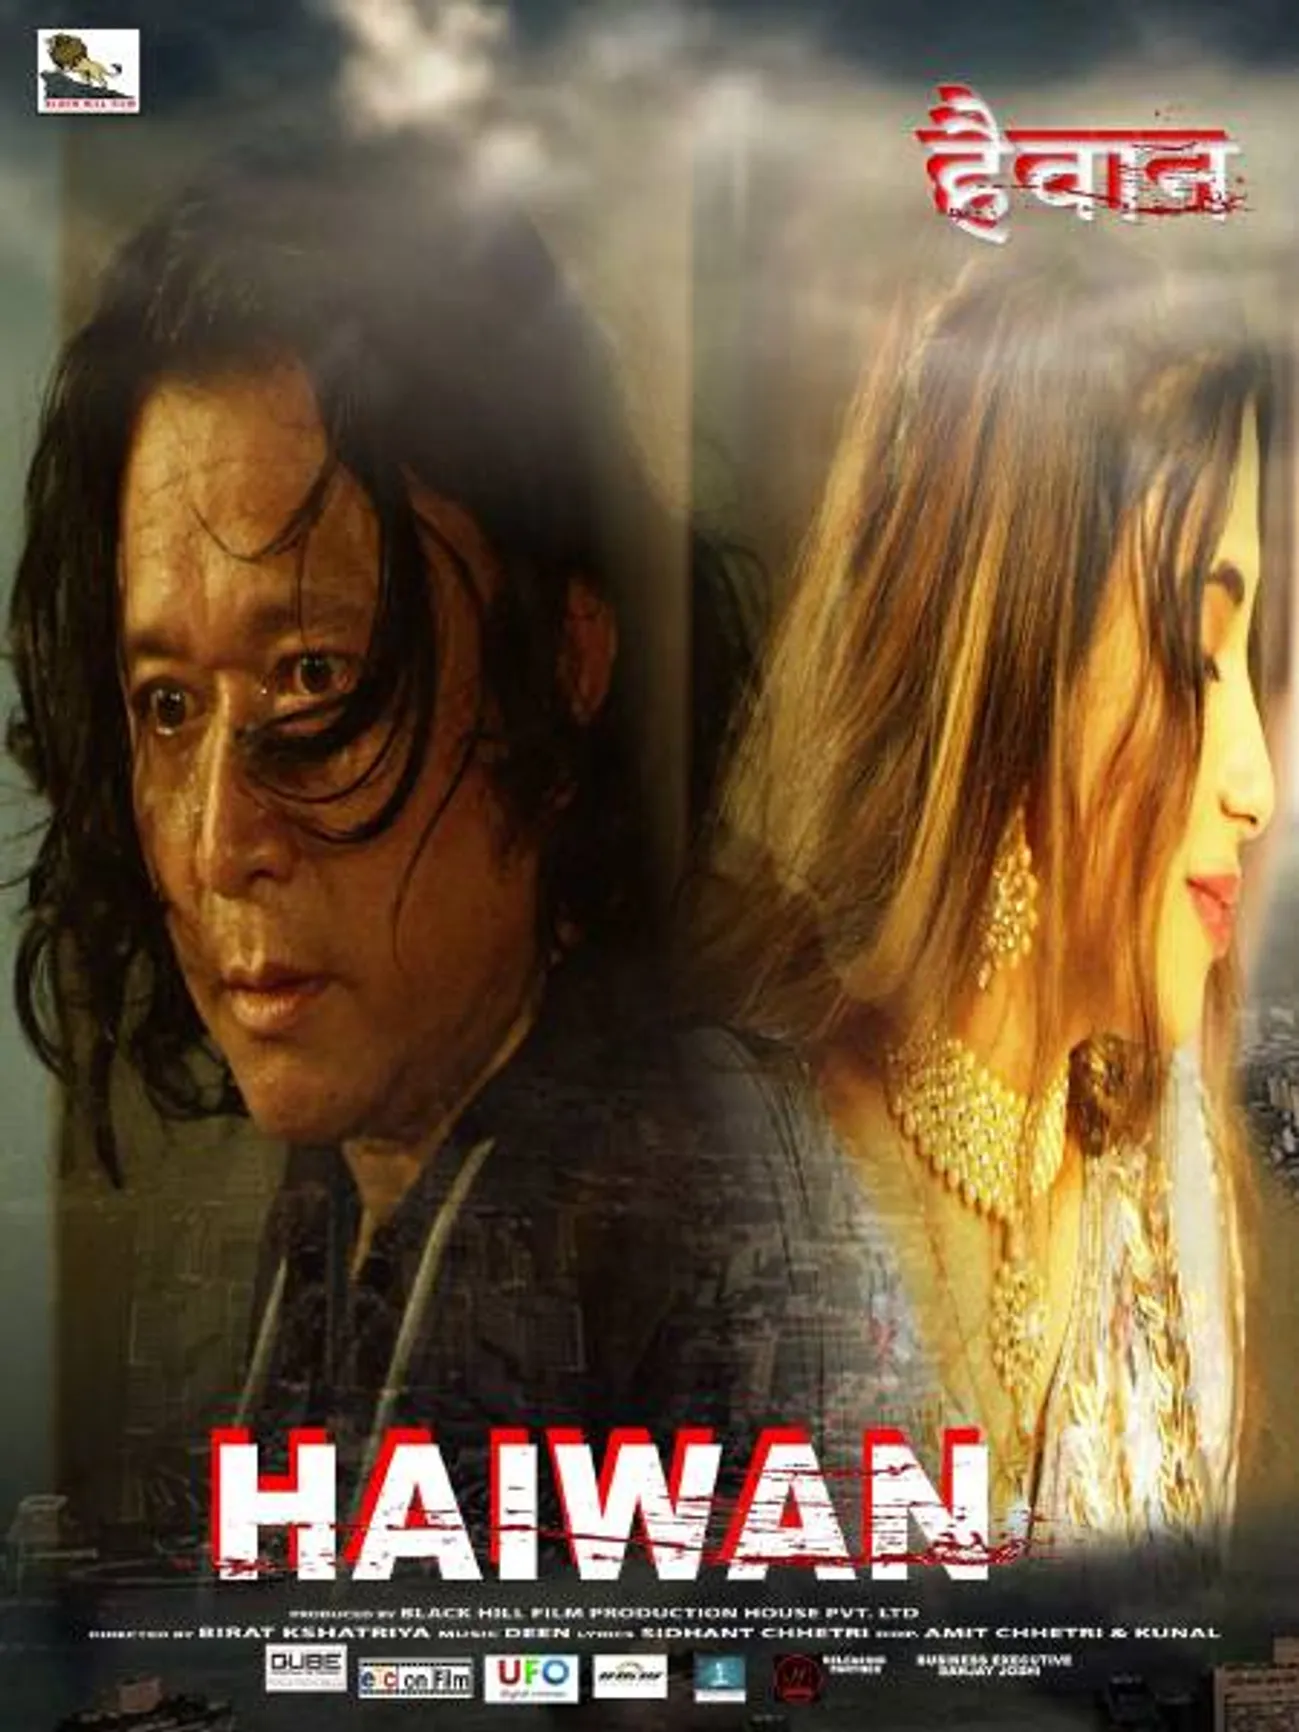  Hindi feature film ‘Haiwaan’ 